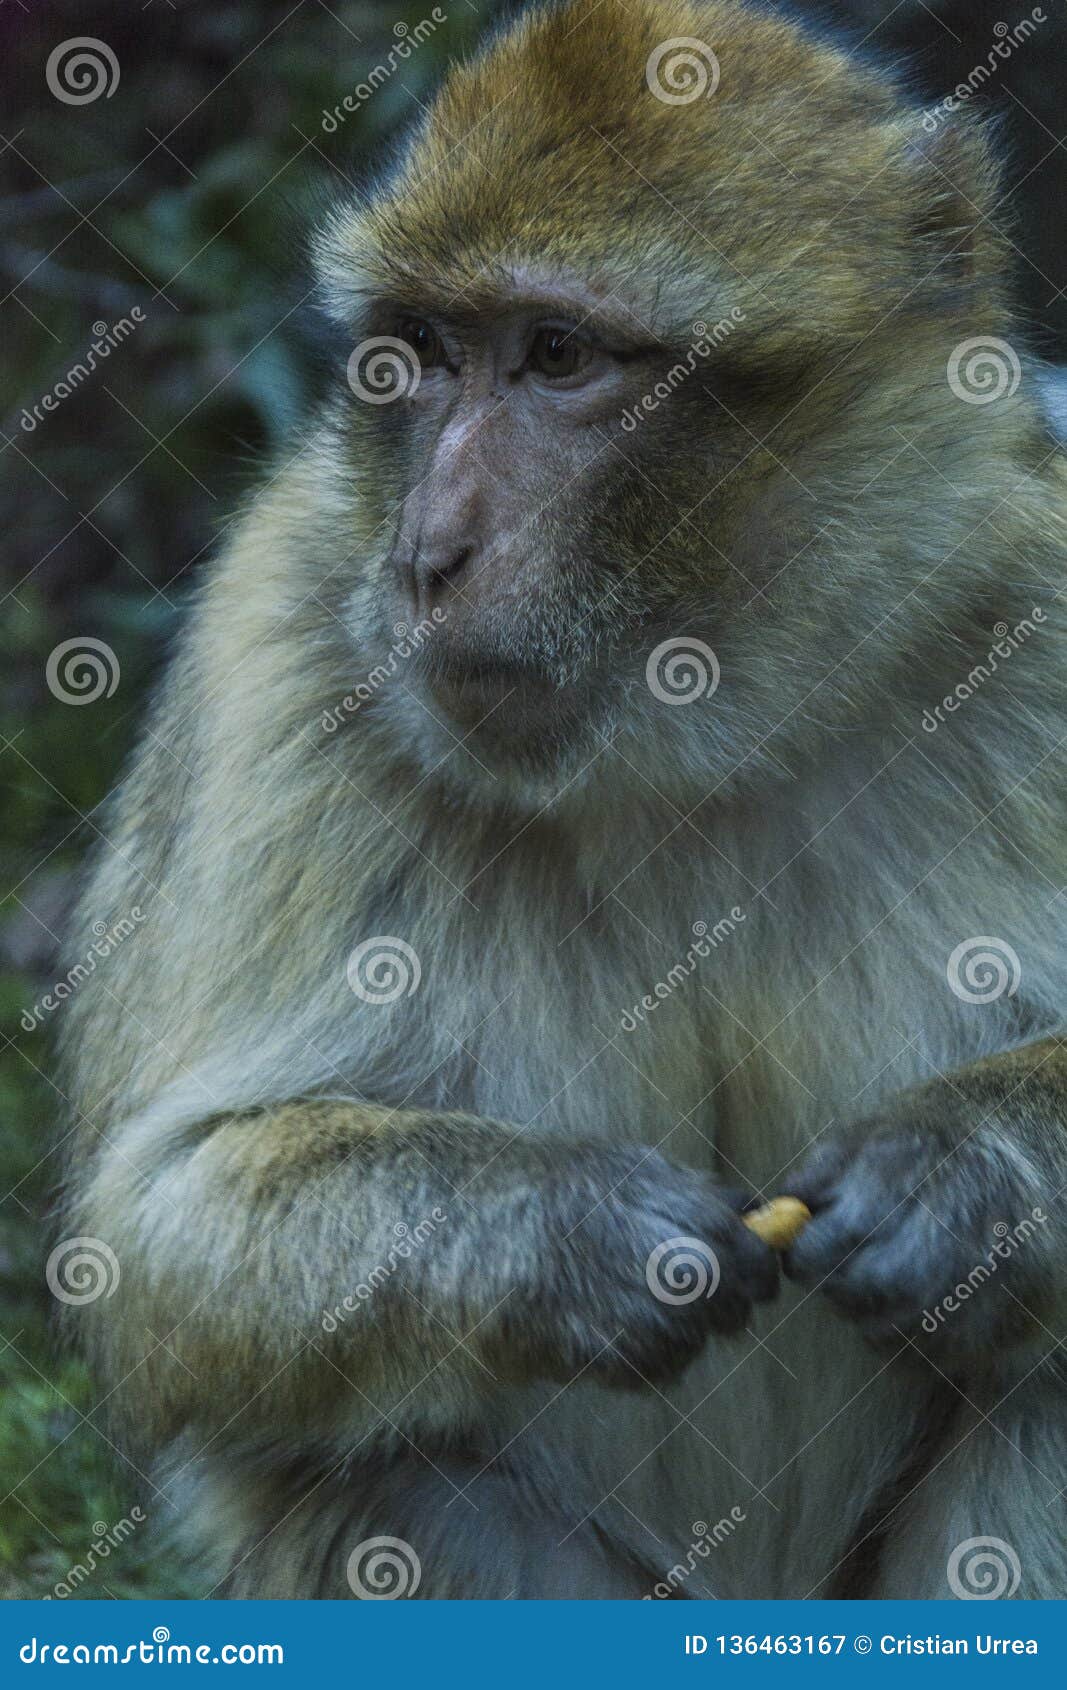 monkey in morocco